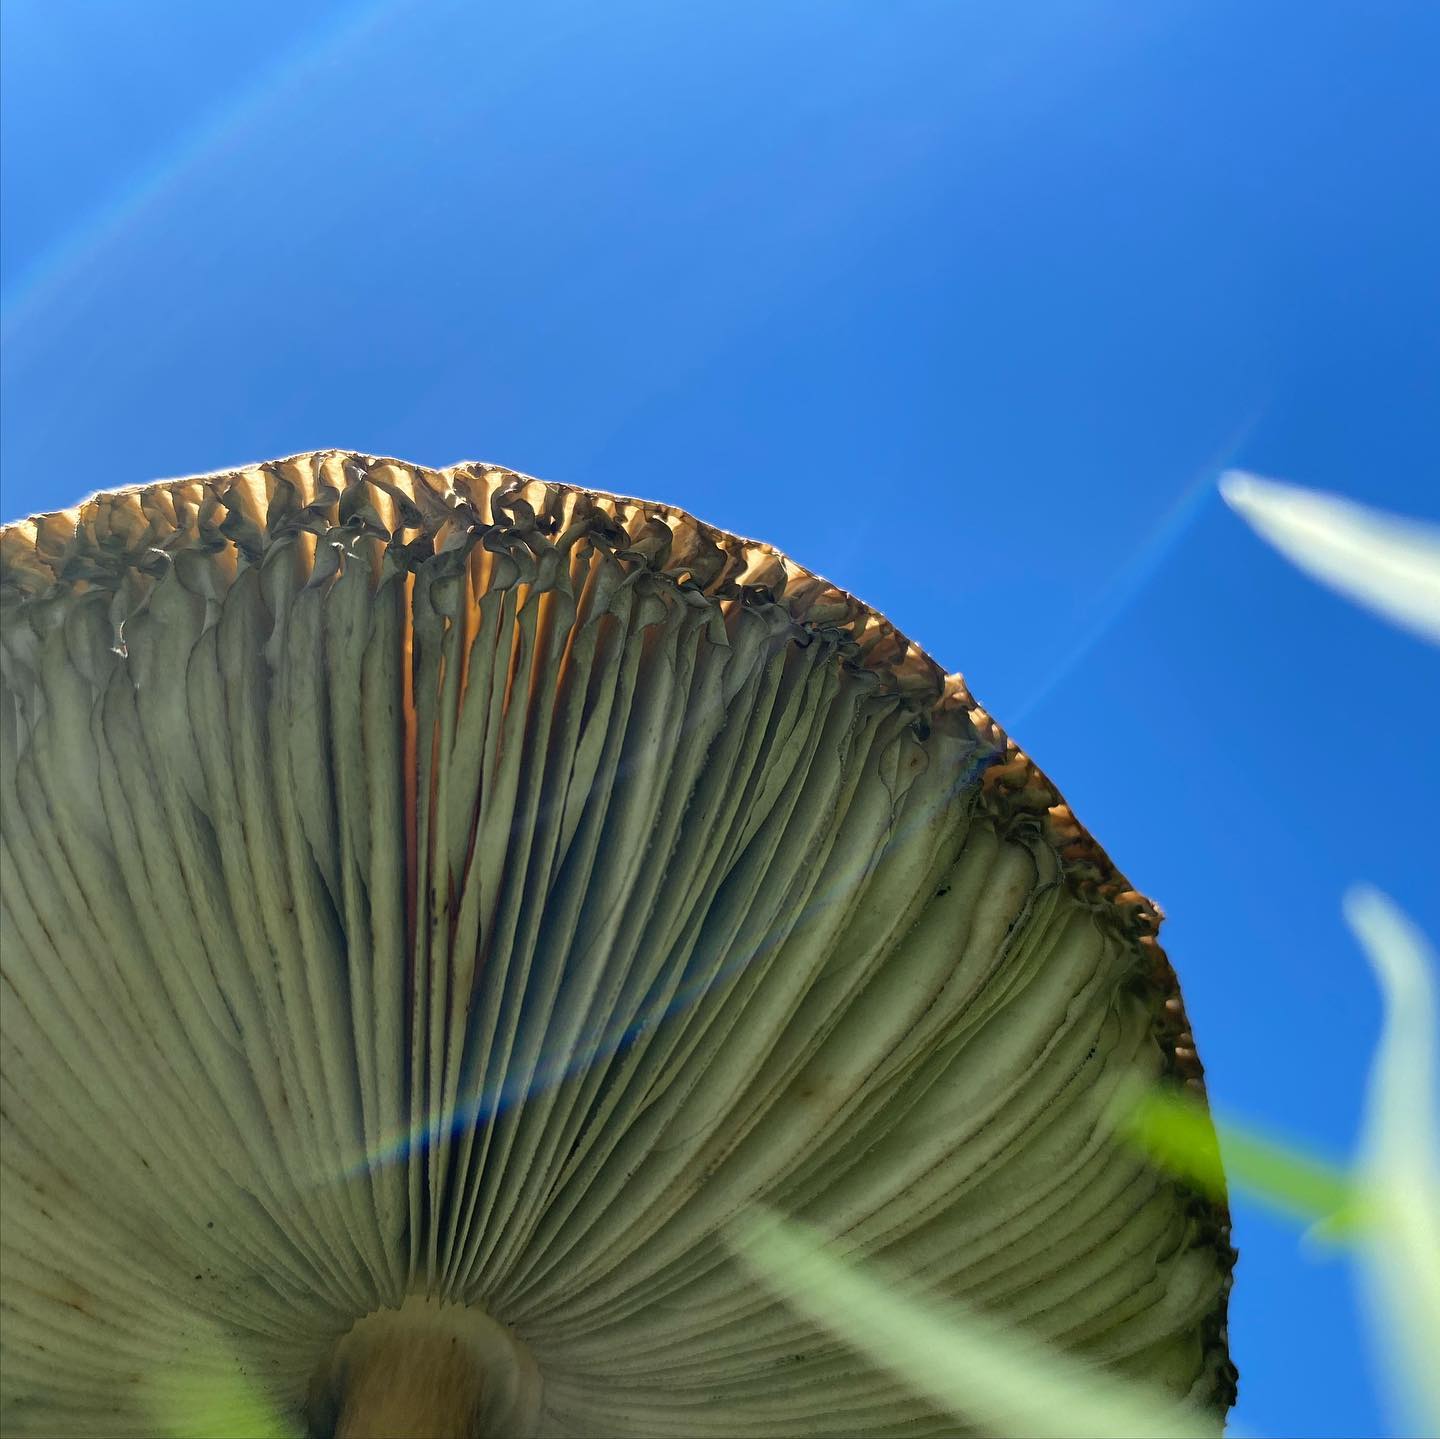 Gills of basidiomycota mushroom